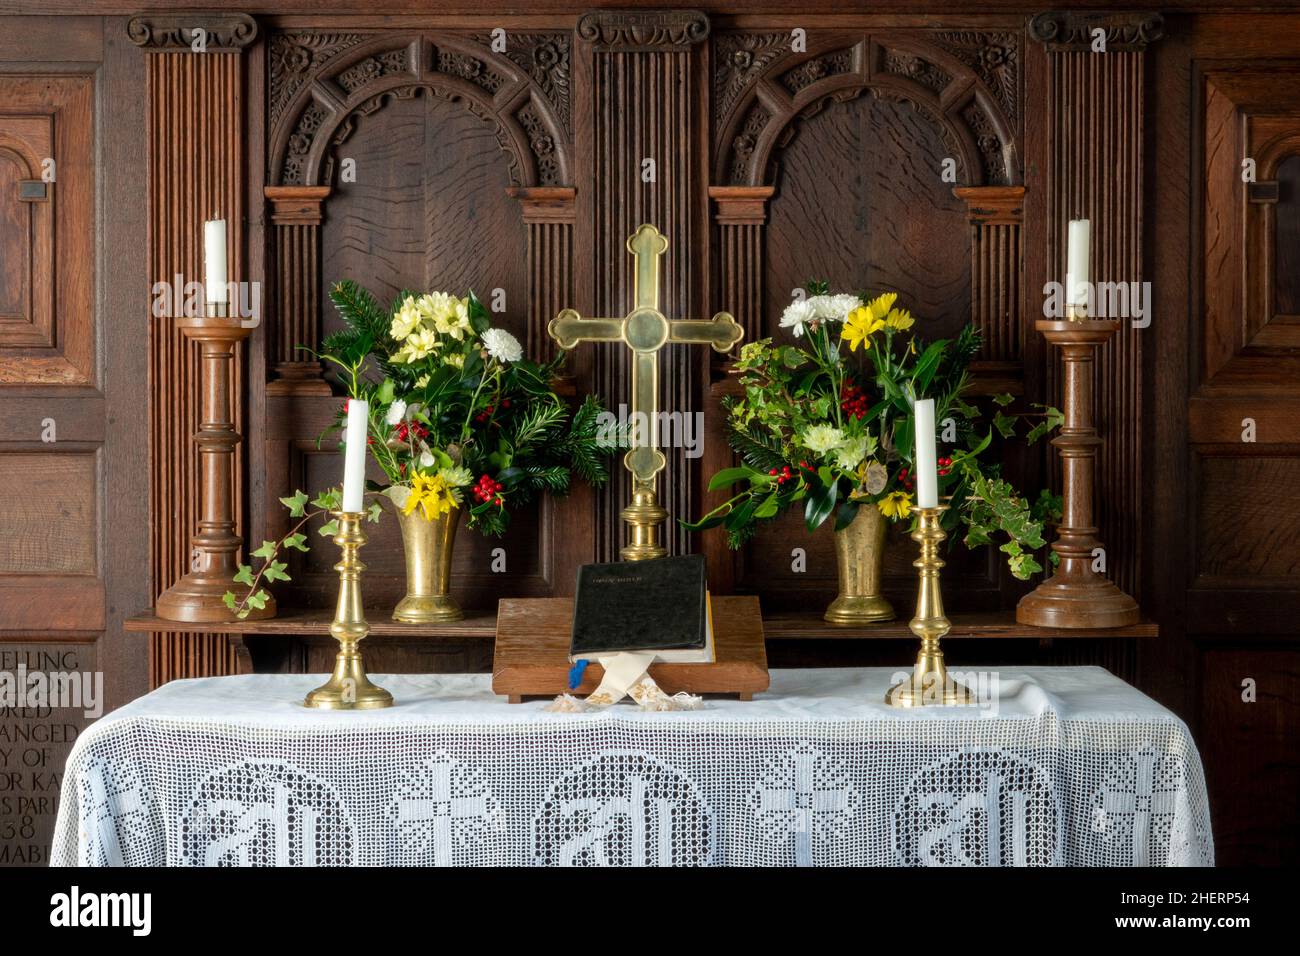 Die Altarkirche St. Mary Dallinghoo Suffolk Stockfoto